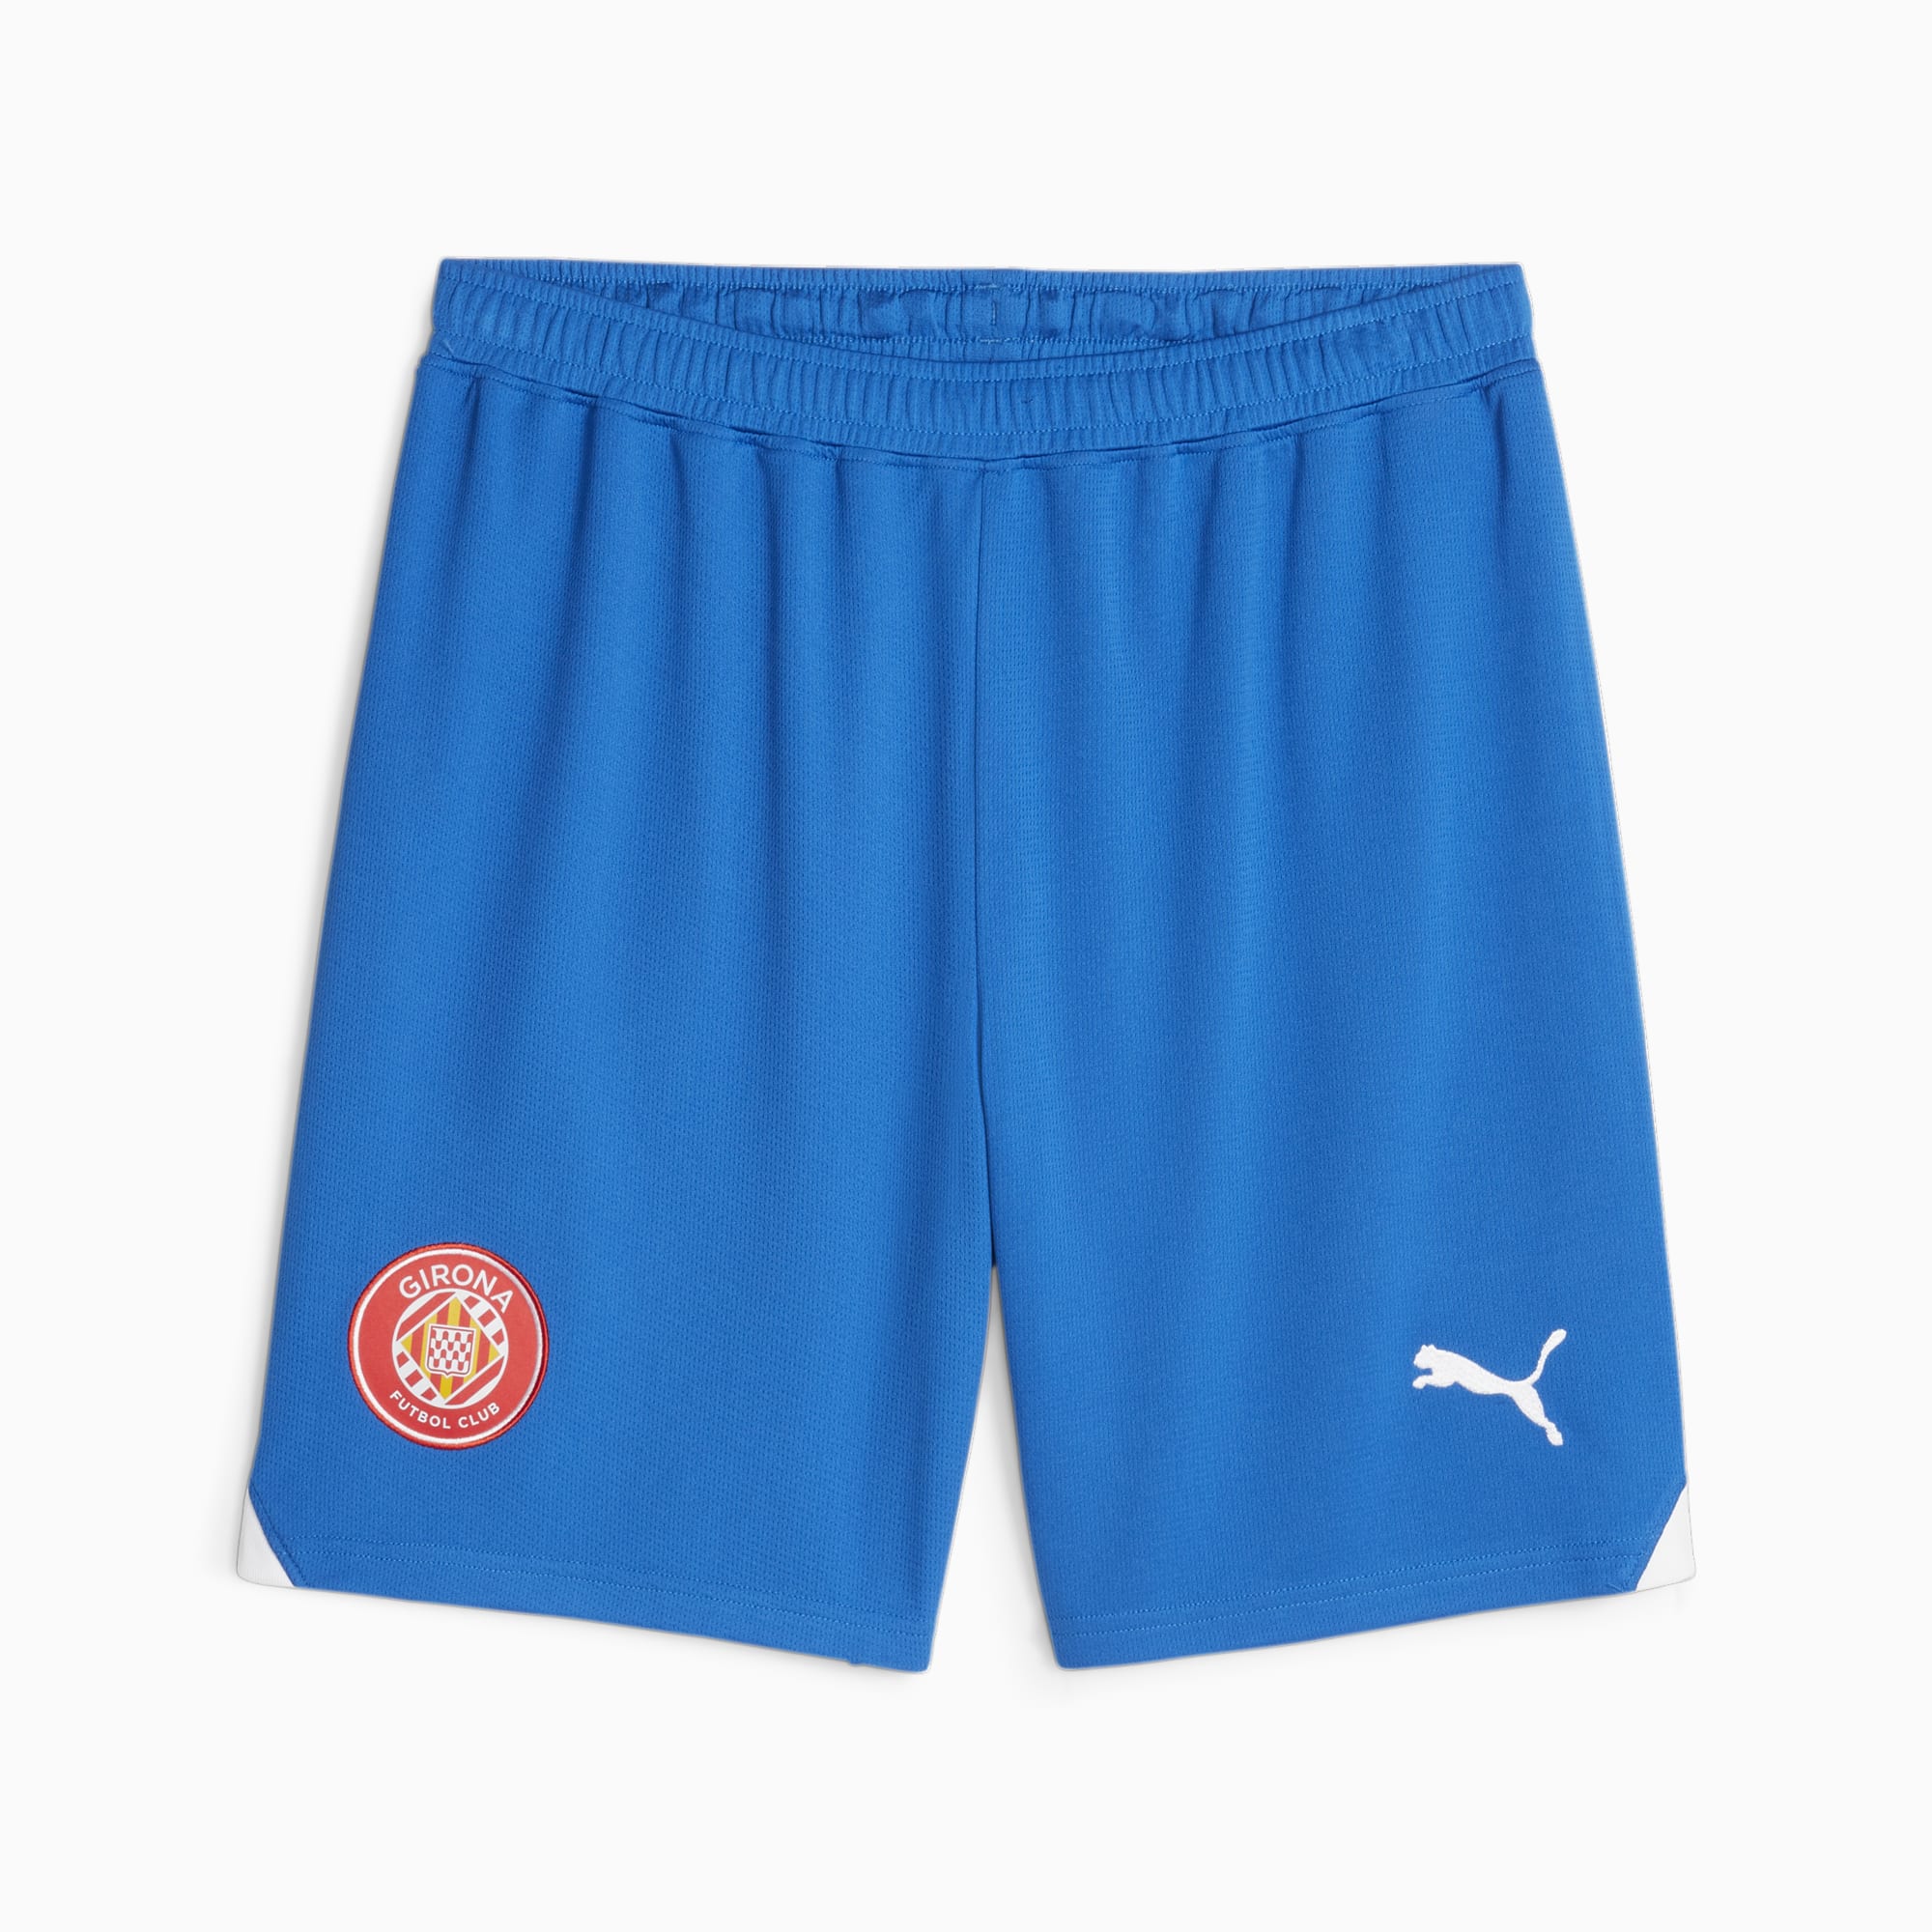 Men's PUMA Girona FC Football Shorts, Royal Blue, Size S, Clothing